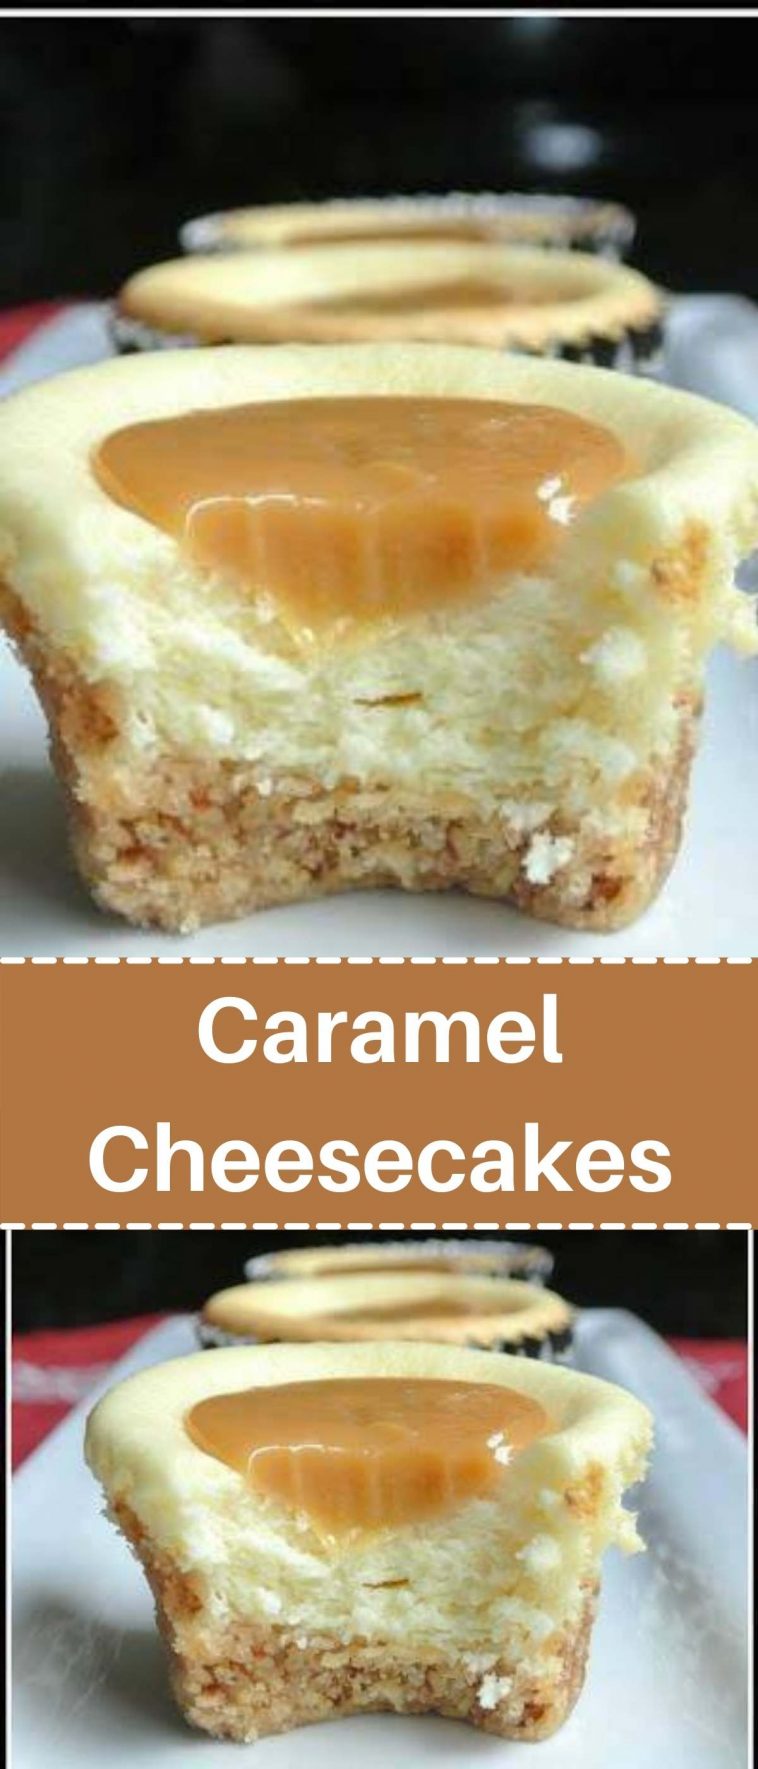 Caramel Cheesecakes